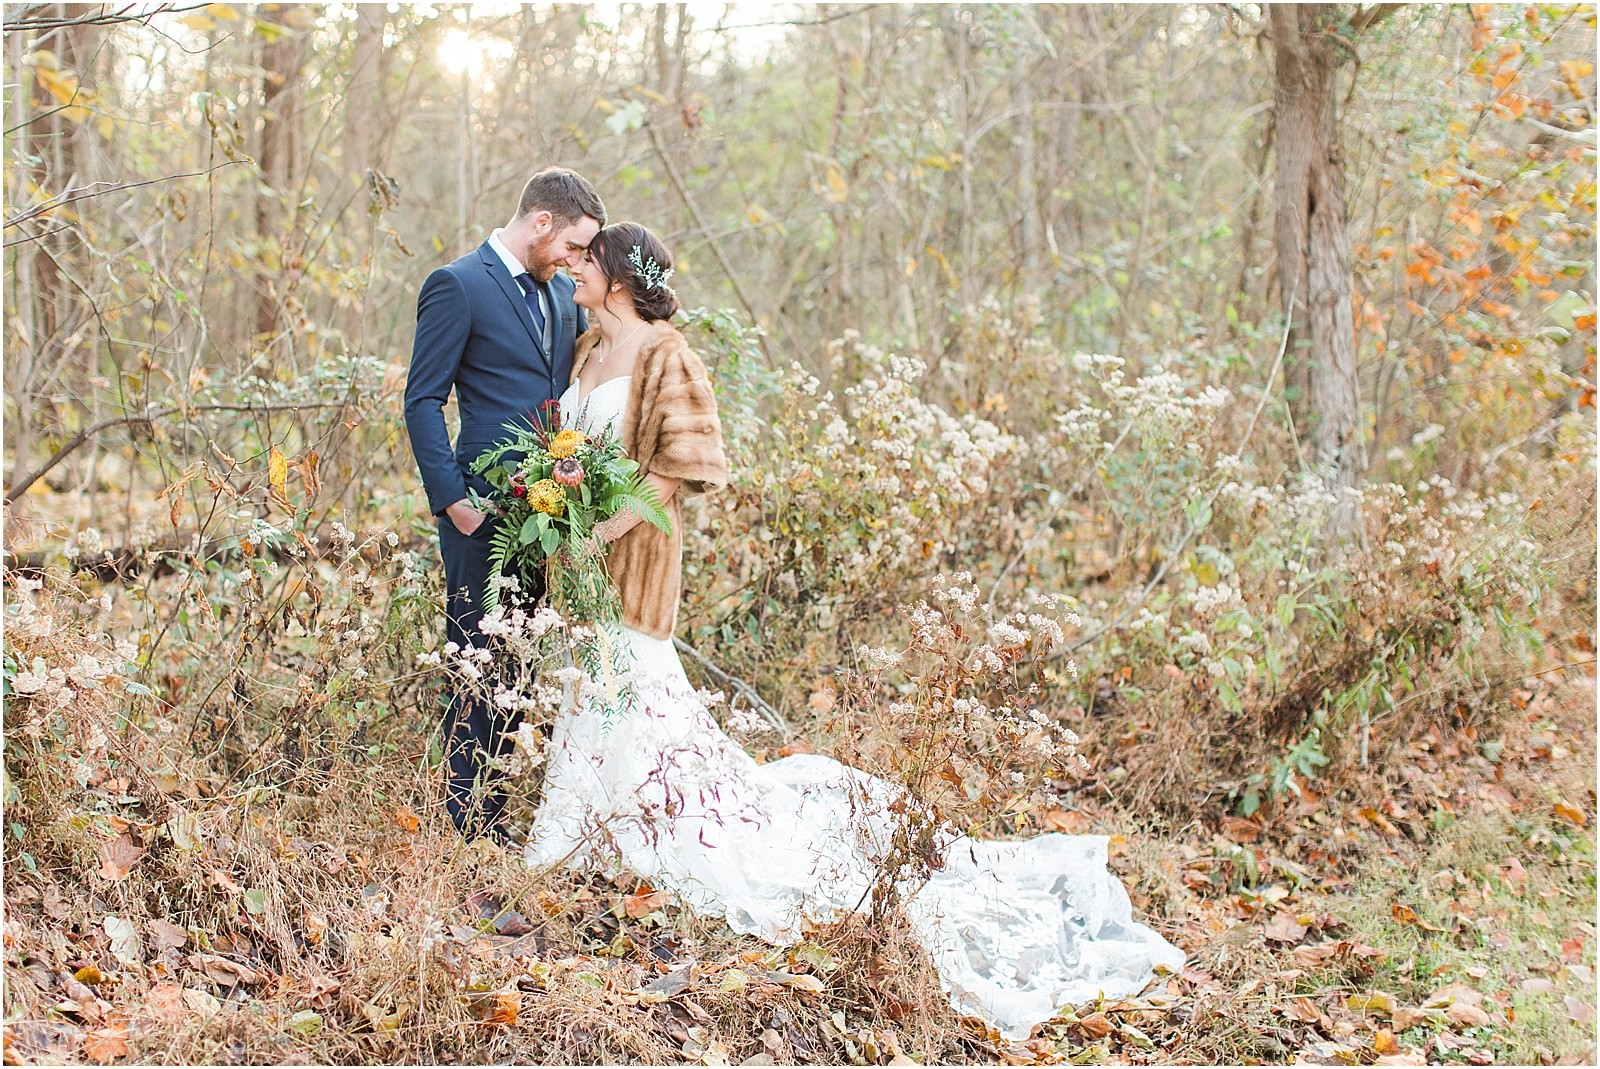 Walker and Alyssa's intimate fall wedding in Southern Indiana. | Wedding Photography | The Corner House Wedding | Southern Indiana Wedding | #fallwedding #intimatewedding | 075.jpg